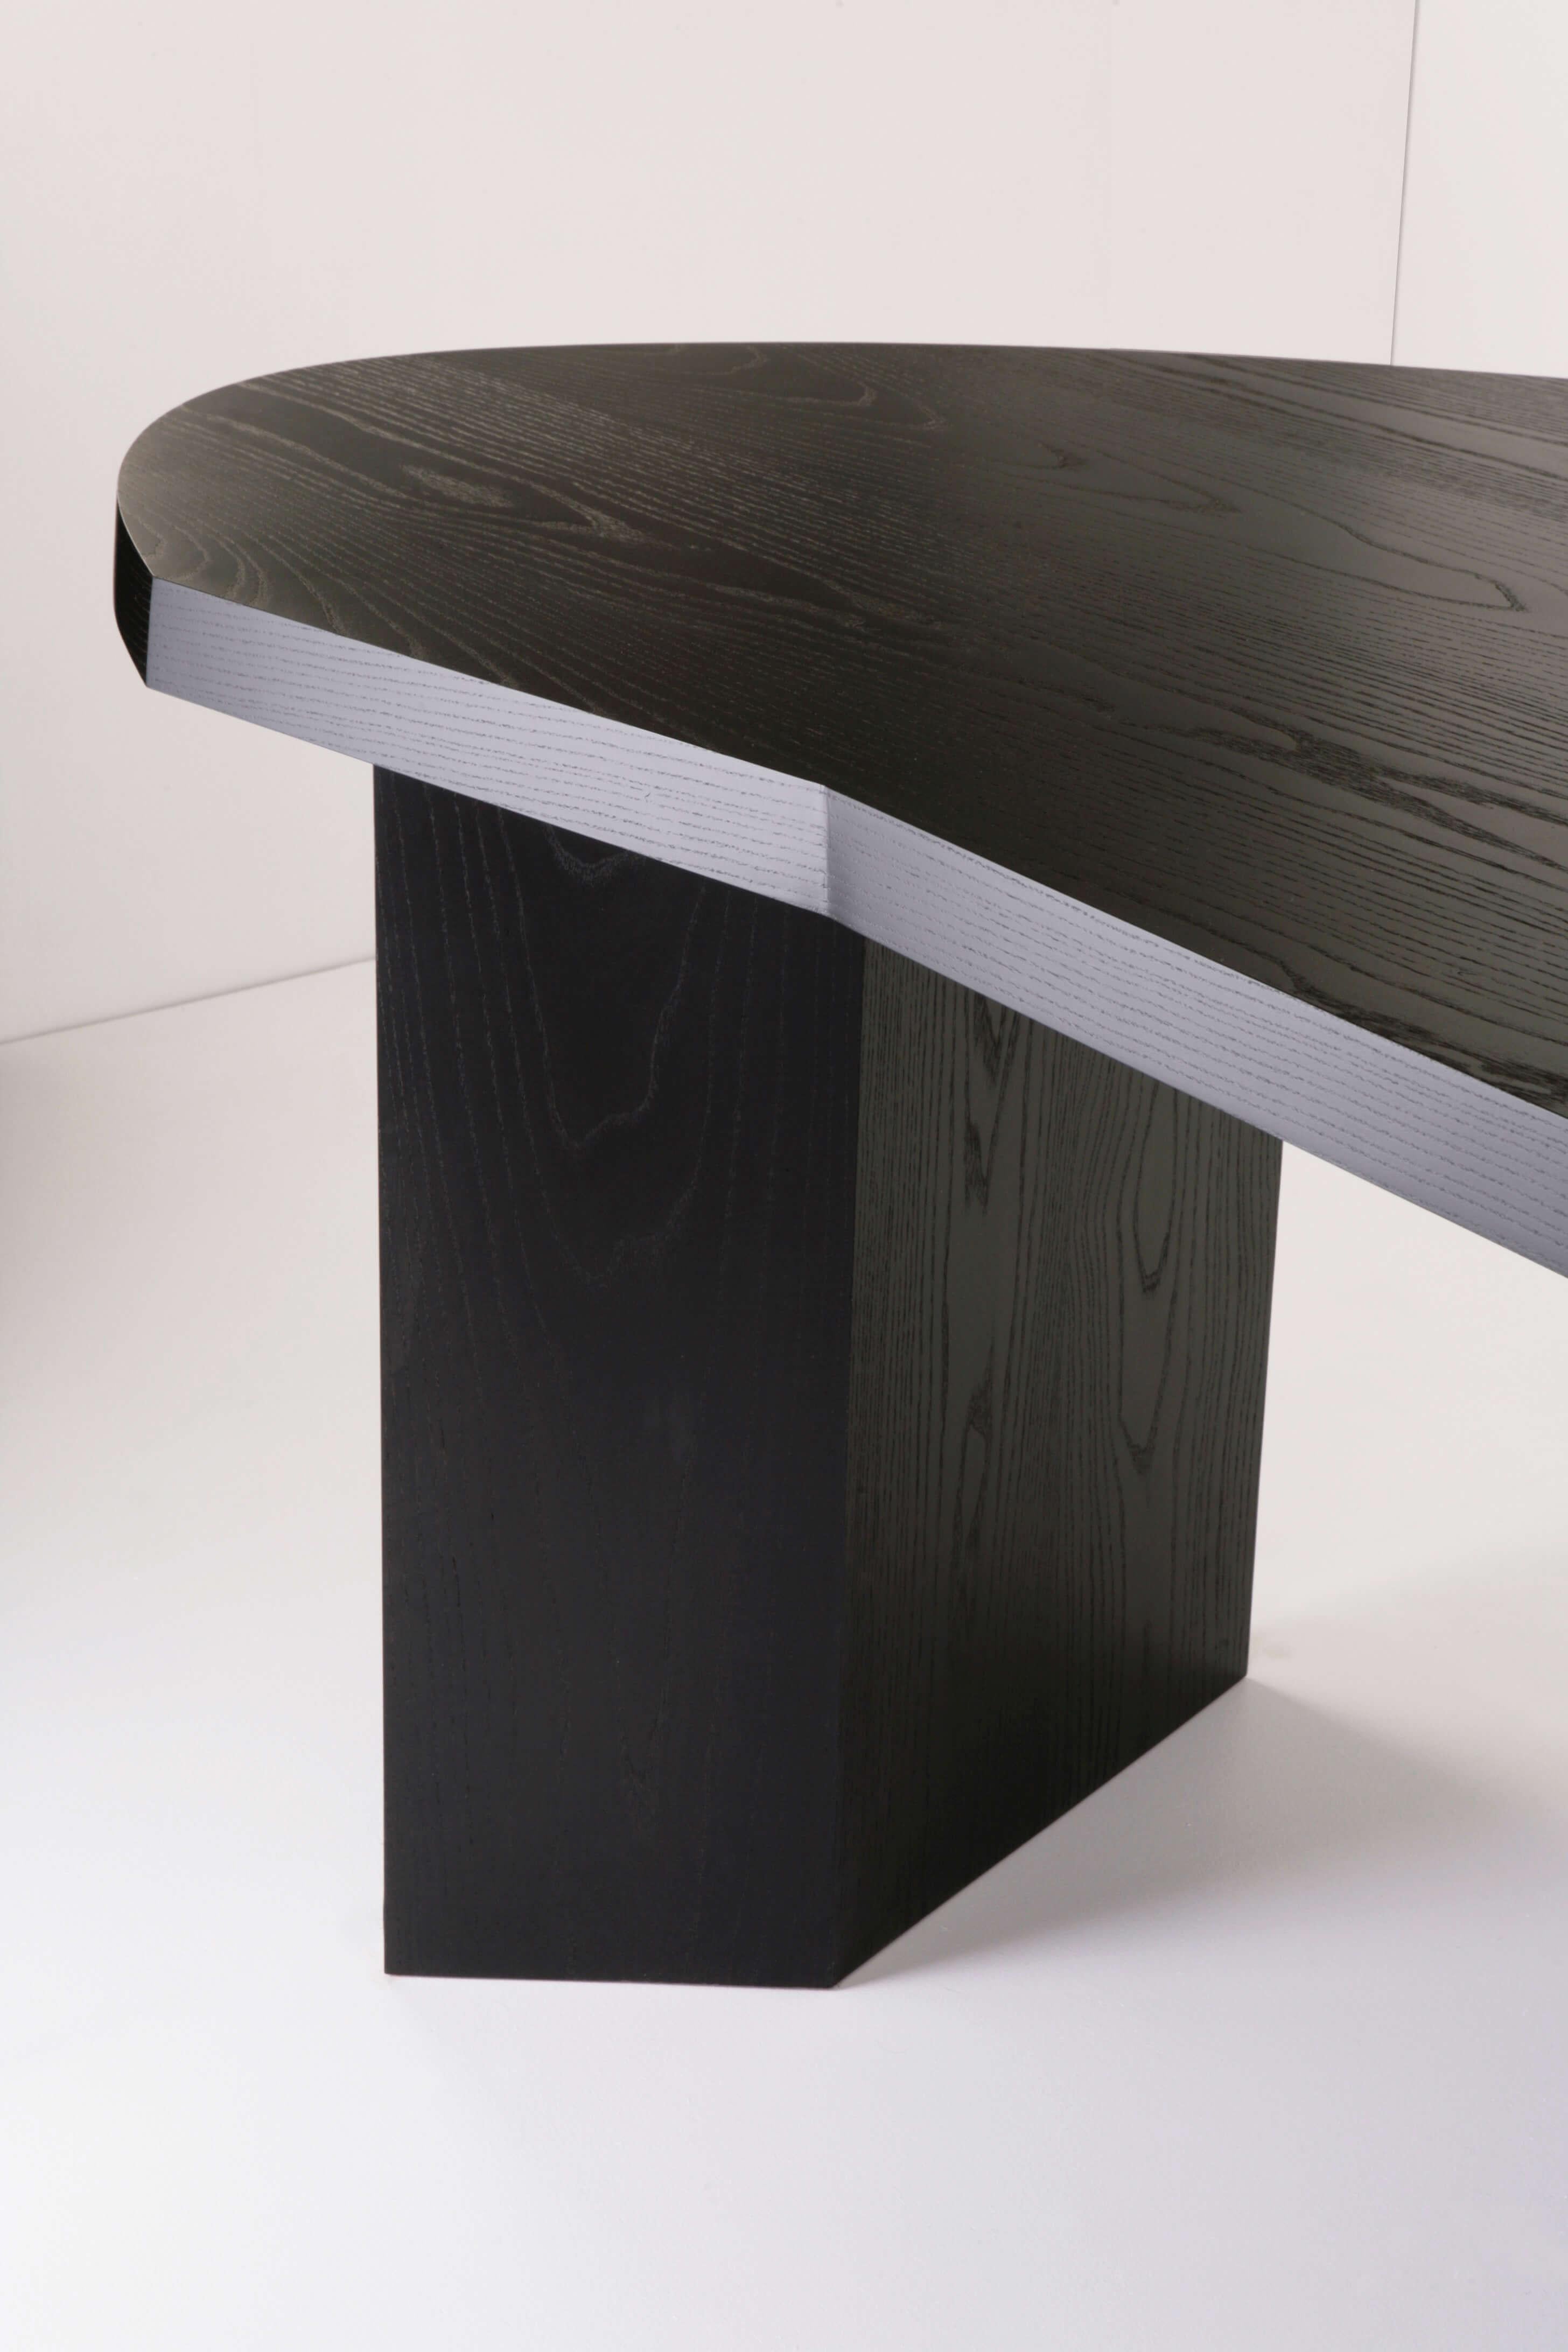 American Chene Table or Desk in Ebonized Ash by Atelier de Troupe, in Stock Now